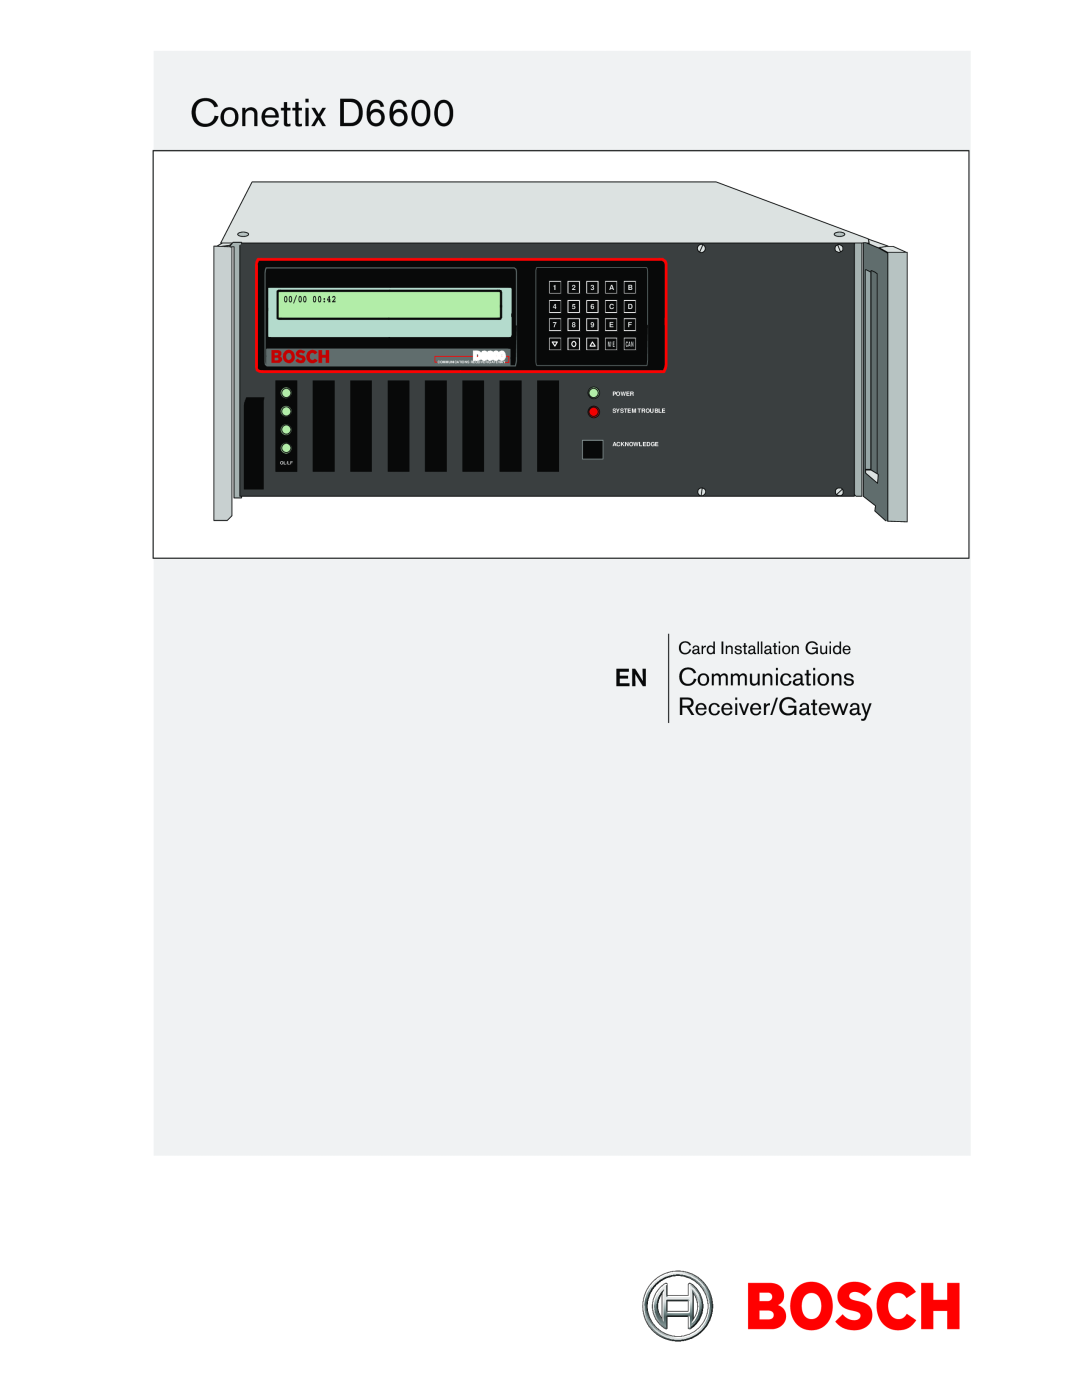 Bosch Appliances manual Computer Interface Manual, Conettix D6600/D6100, Receiver/Gateway 